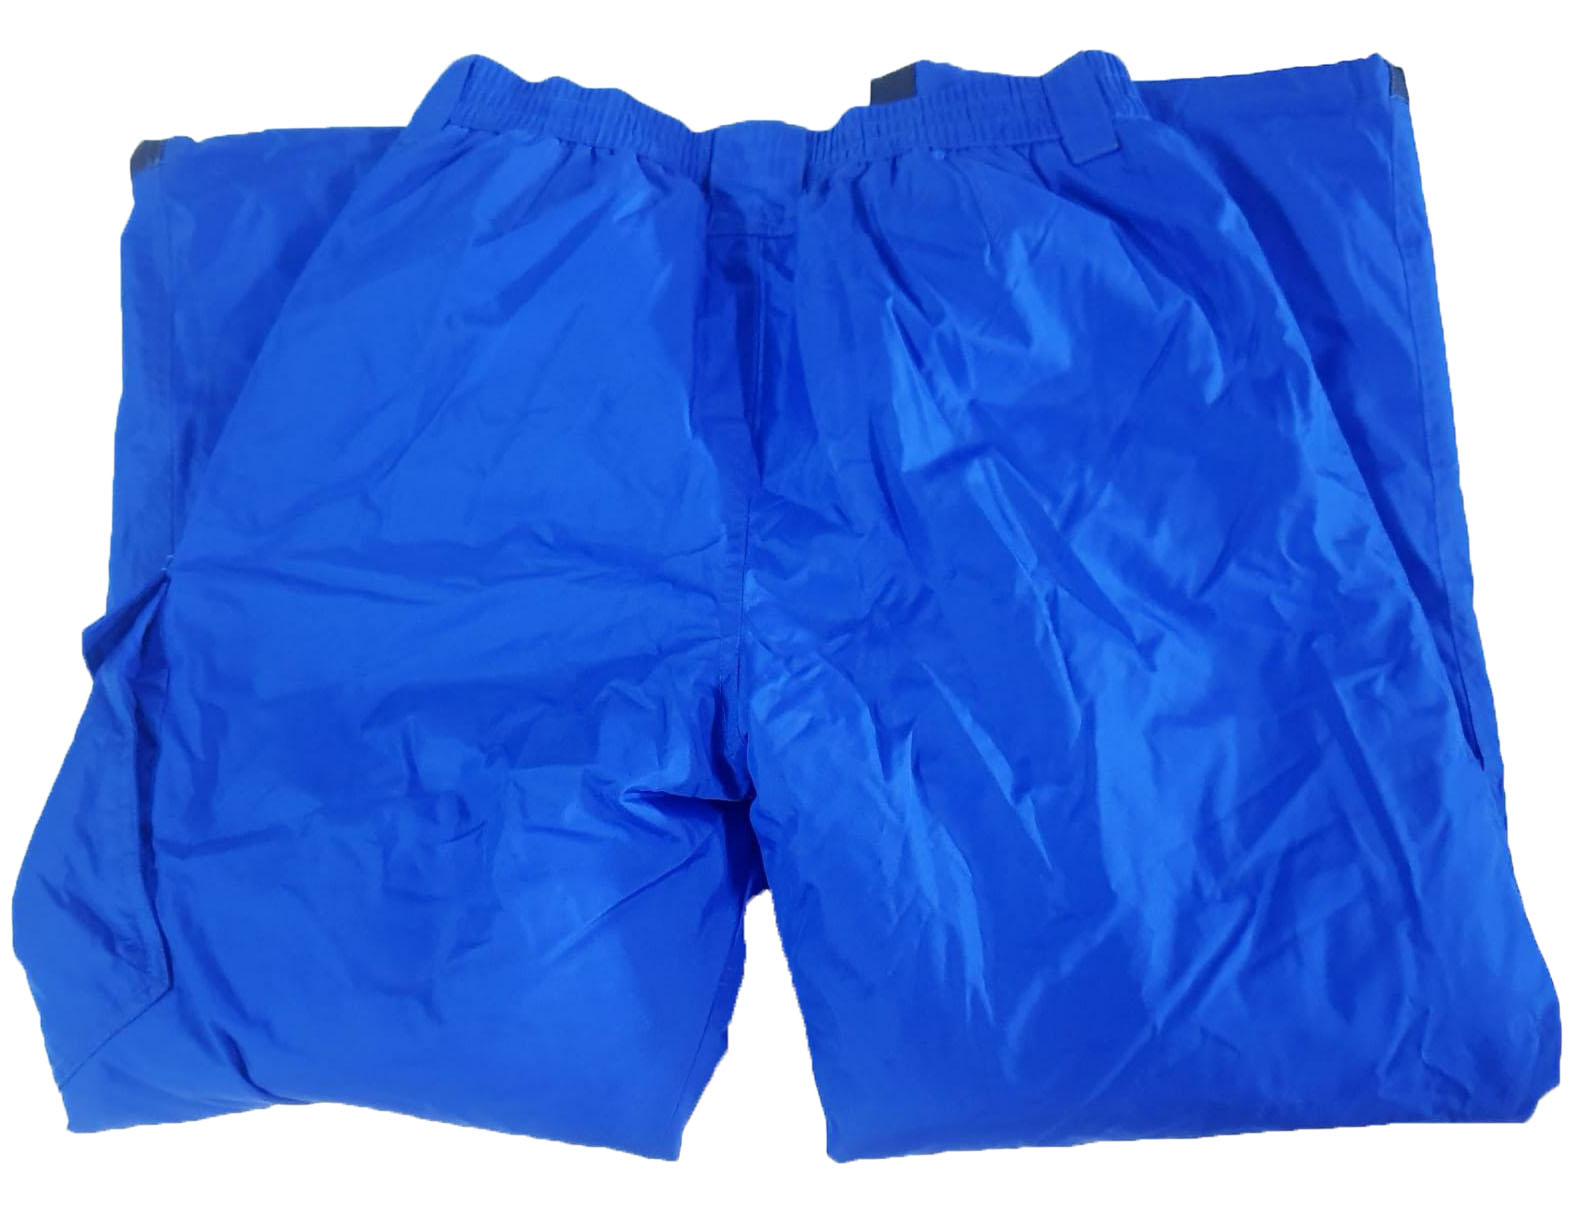 Gerry Boy's Insulated Snow Pants, Royal Blue, XL 887219559730 | eBay